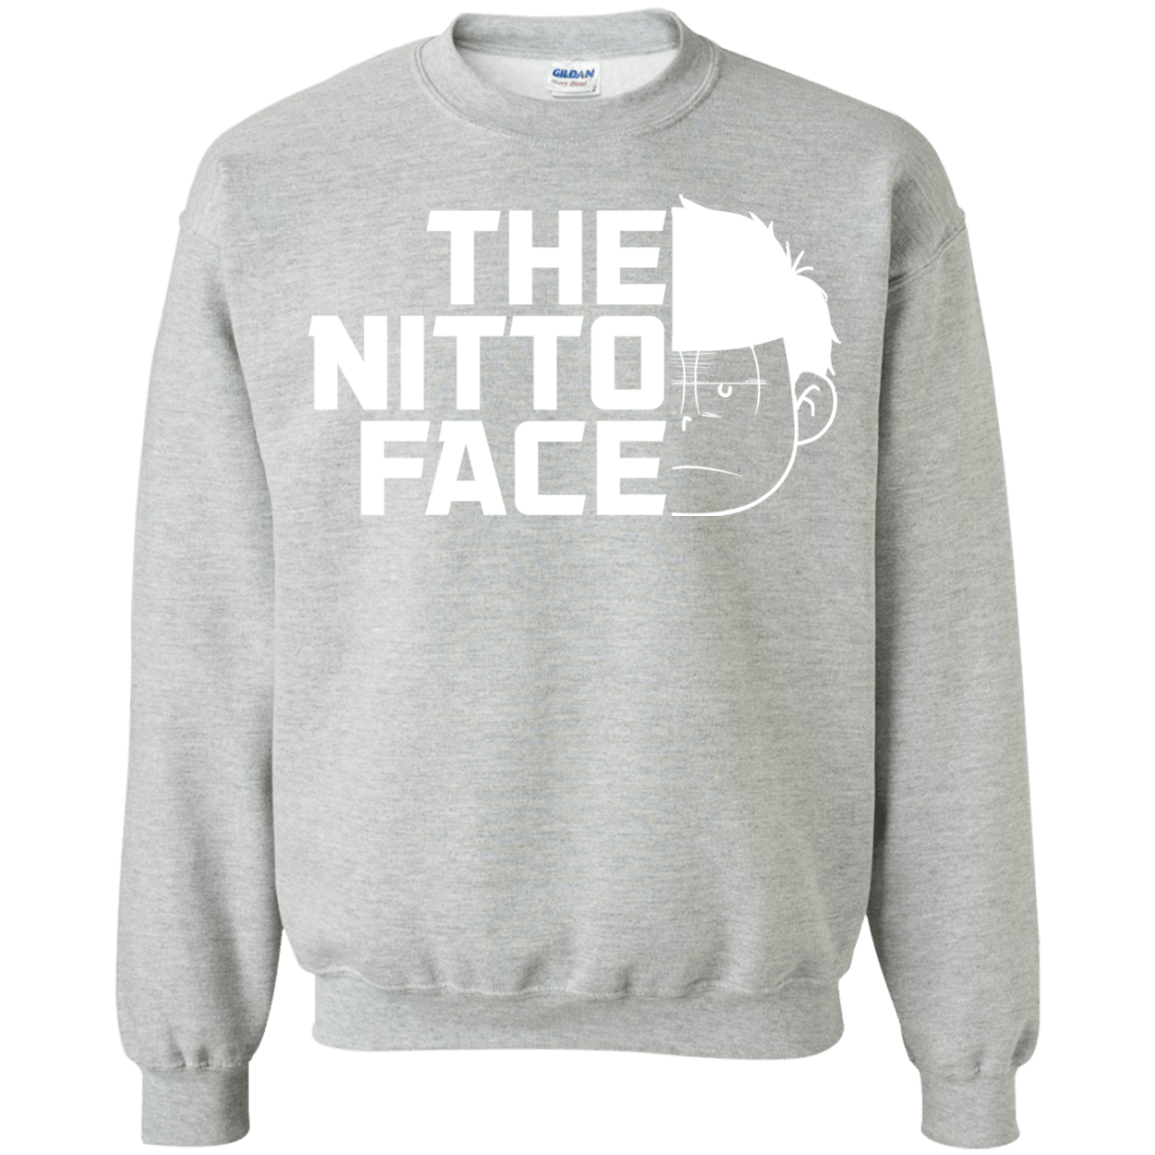 The Nitto Face Crewneck Sweatshirt